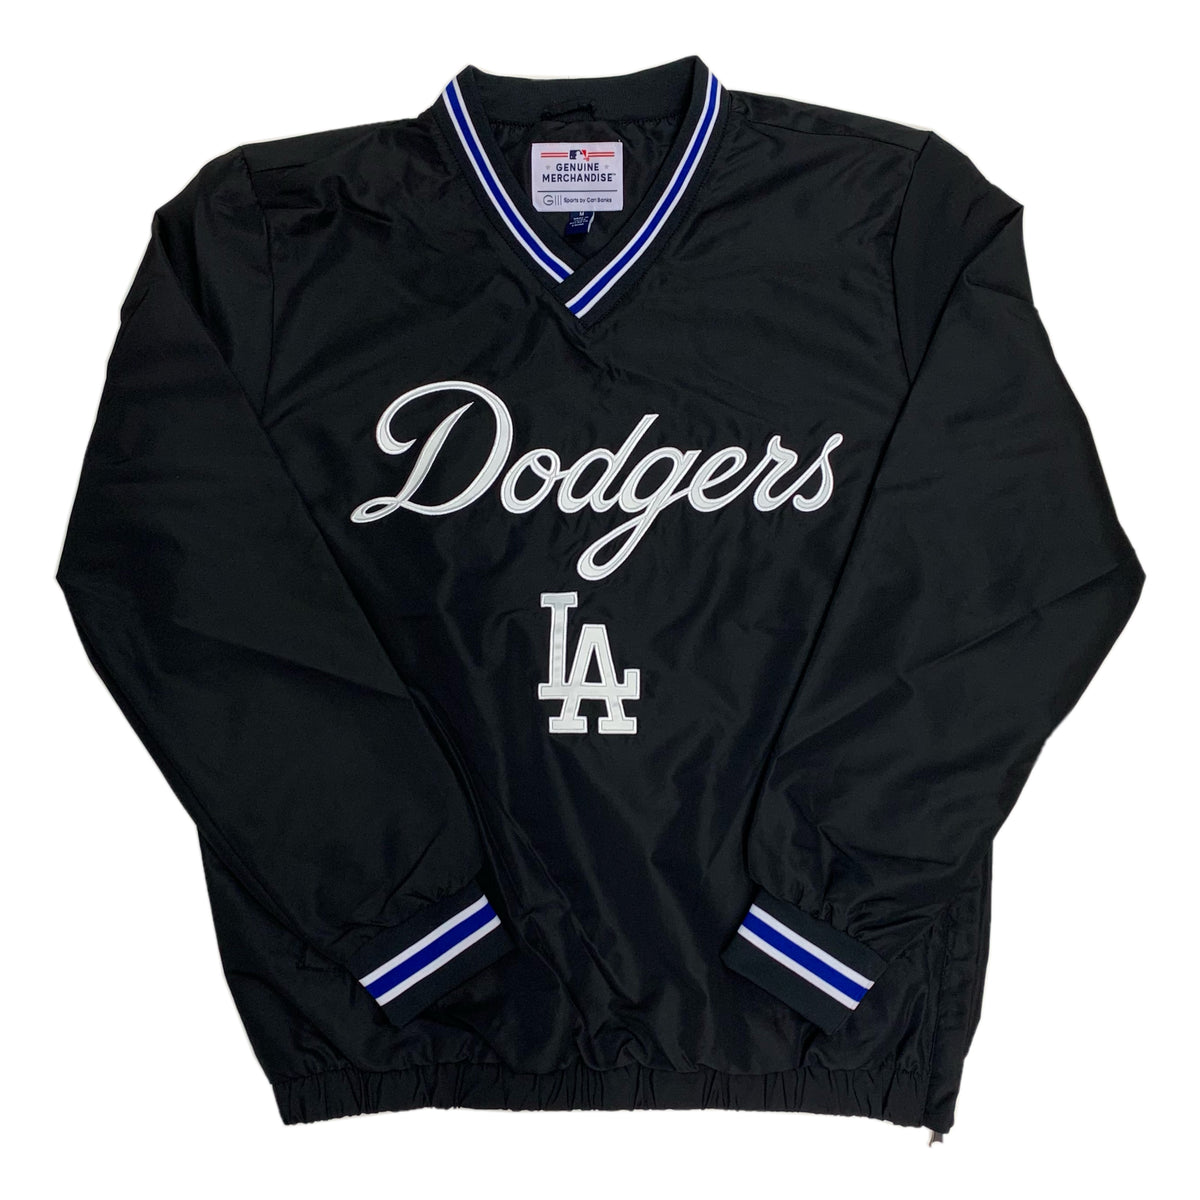 L.A. Dodgers Gear, Dodgers Jerseys, Los Angeles Pro Shop, Los